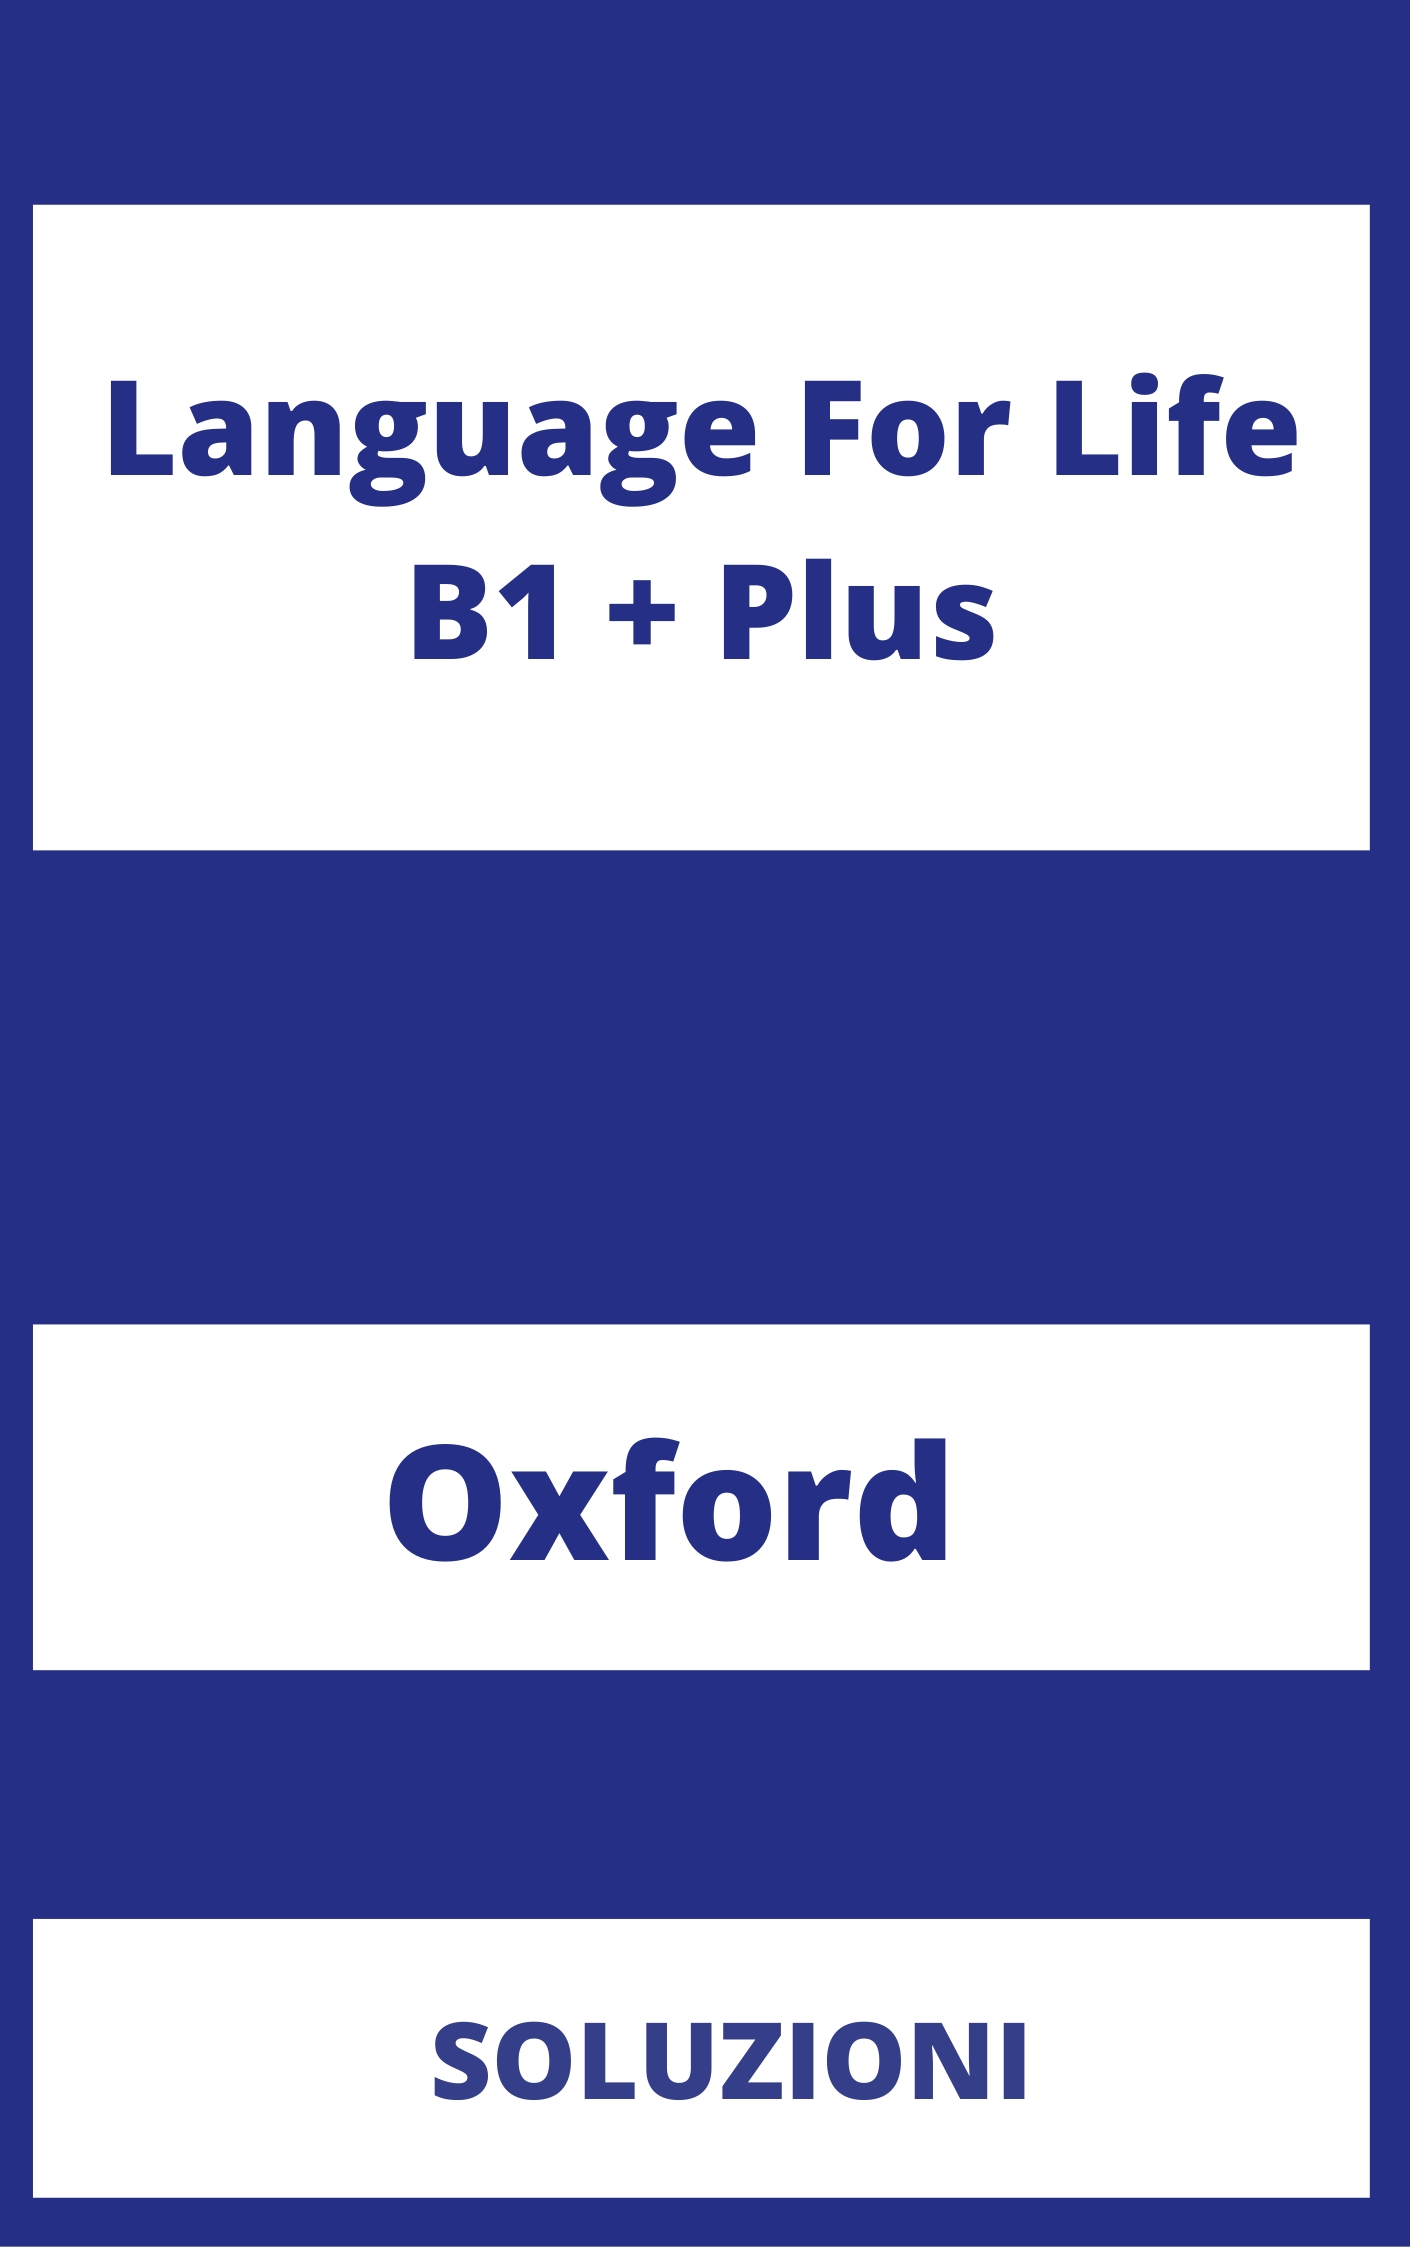 Language For Life B1 + Plus